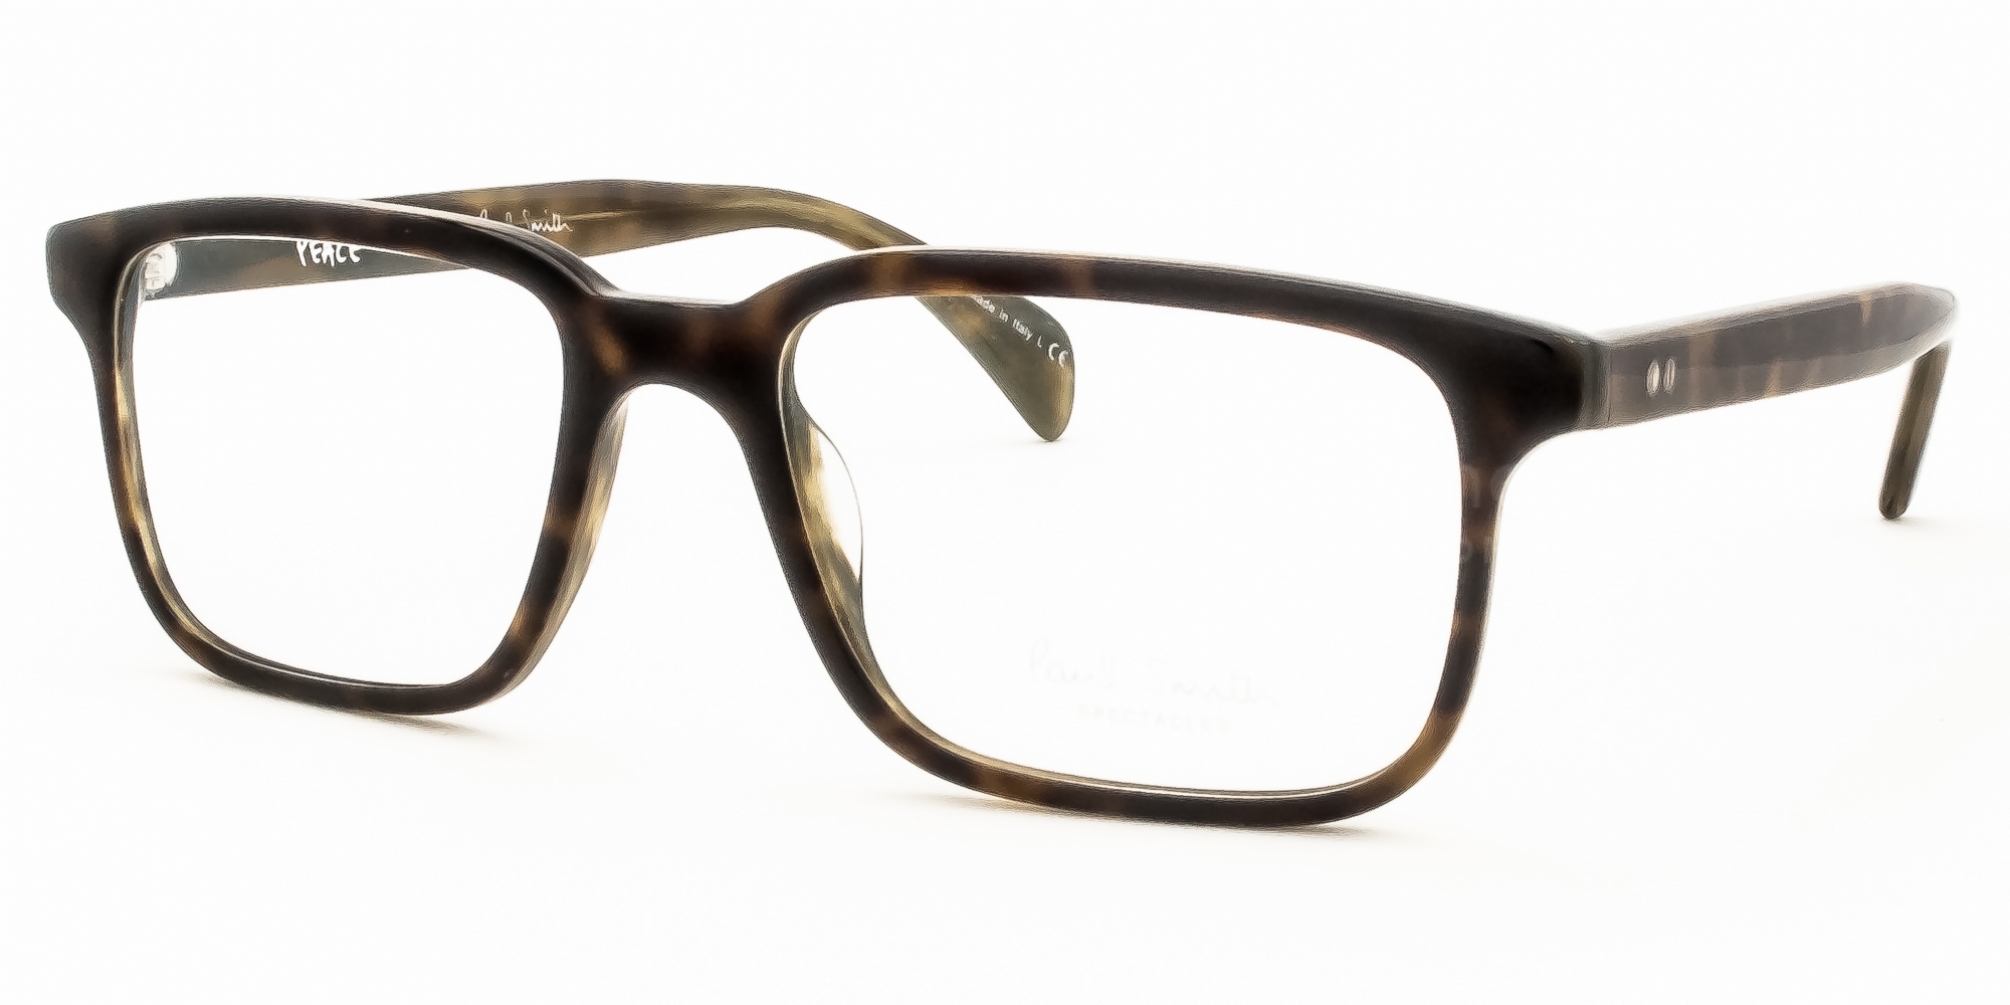 Paul Smith Kenley Eyeglasses